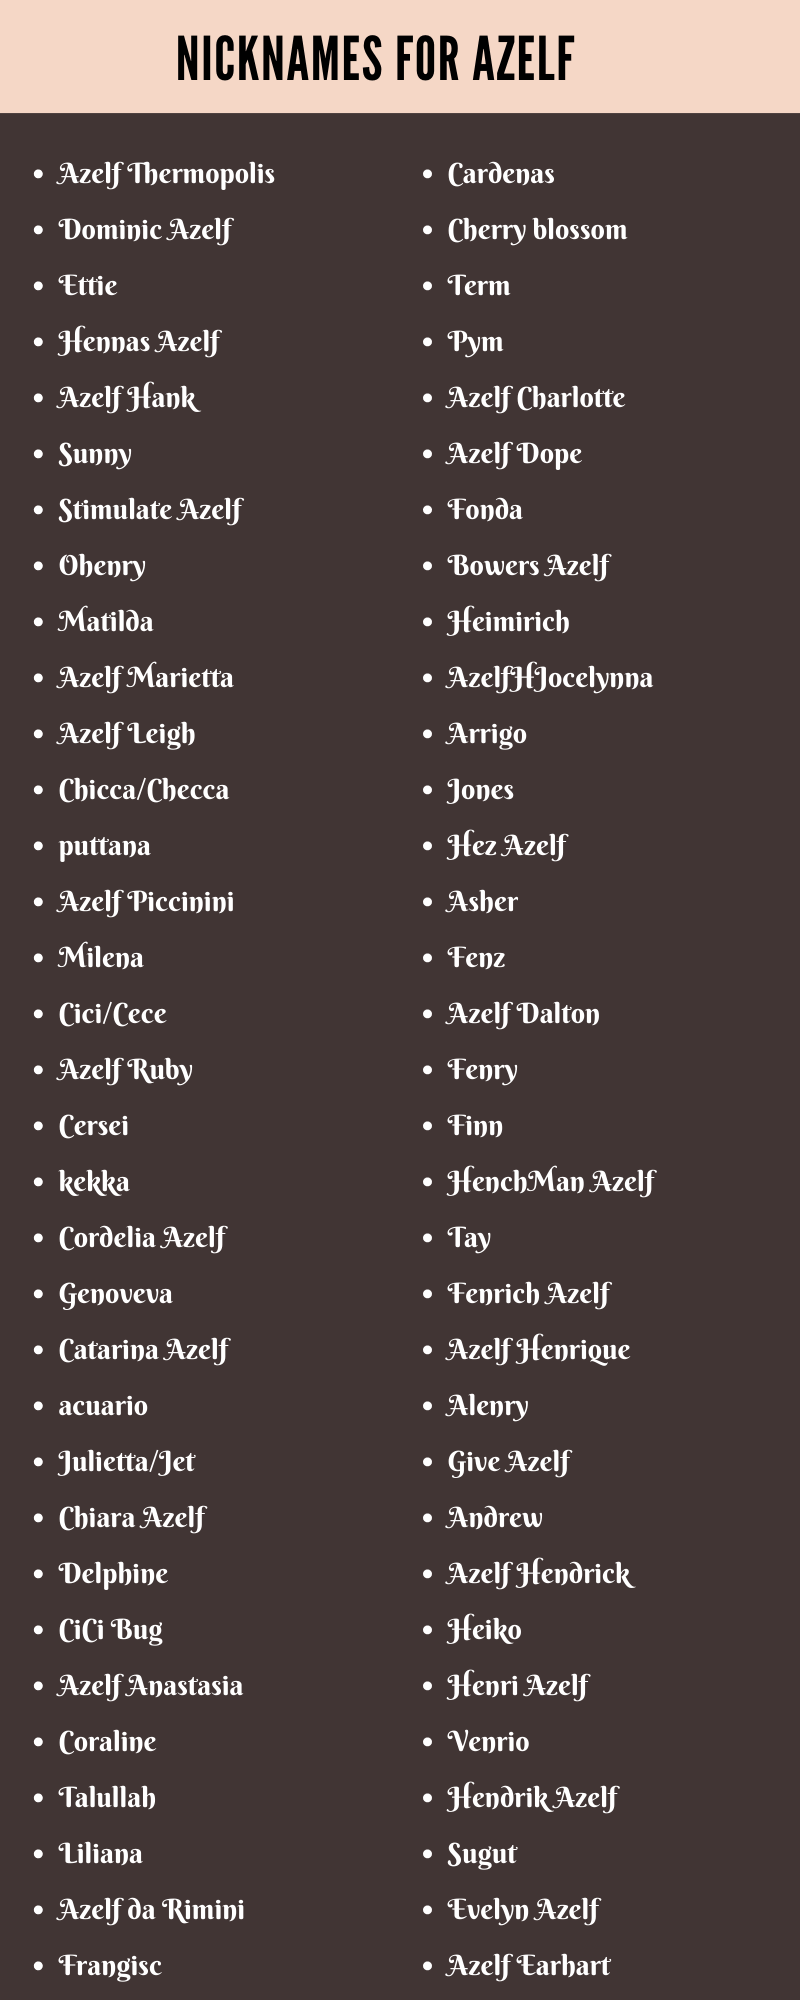 Nicknames for Azelf